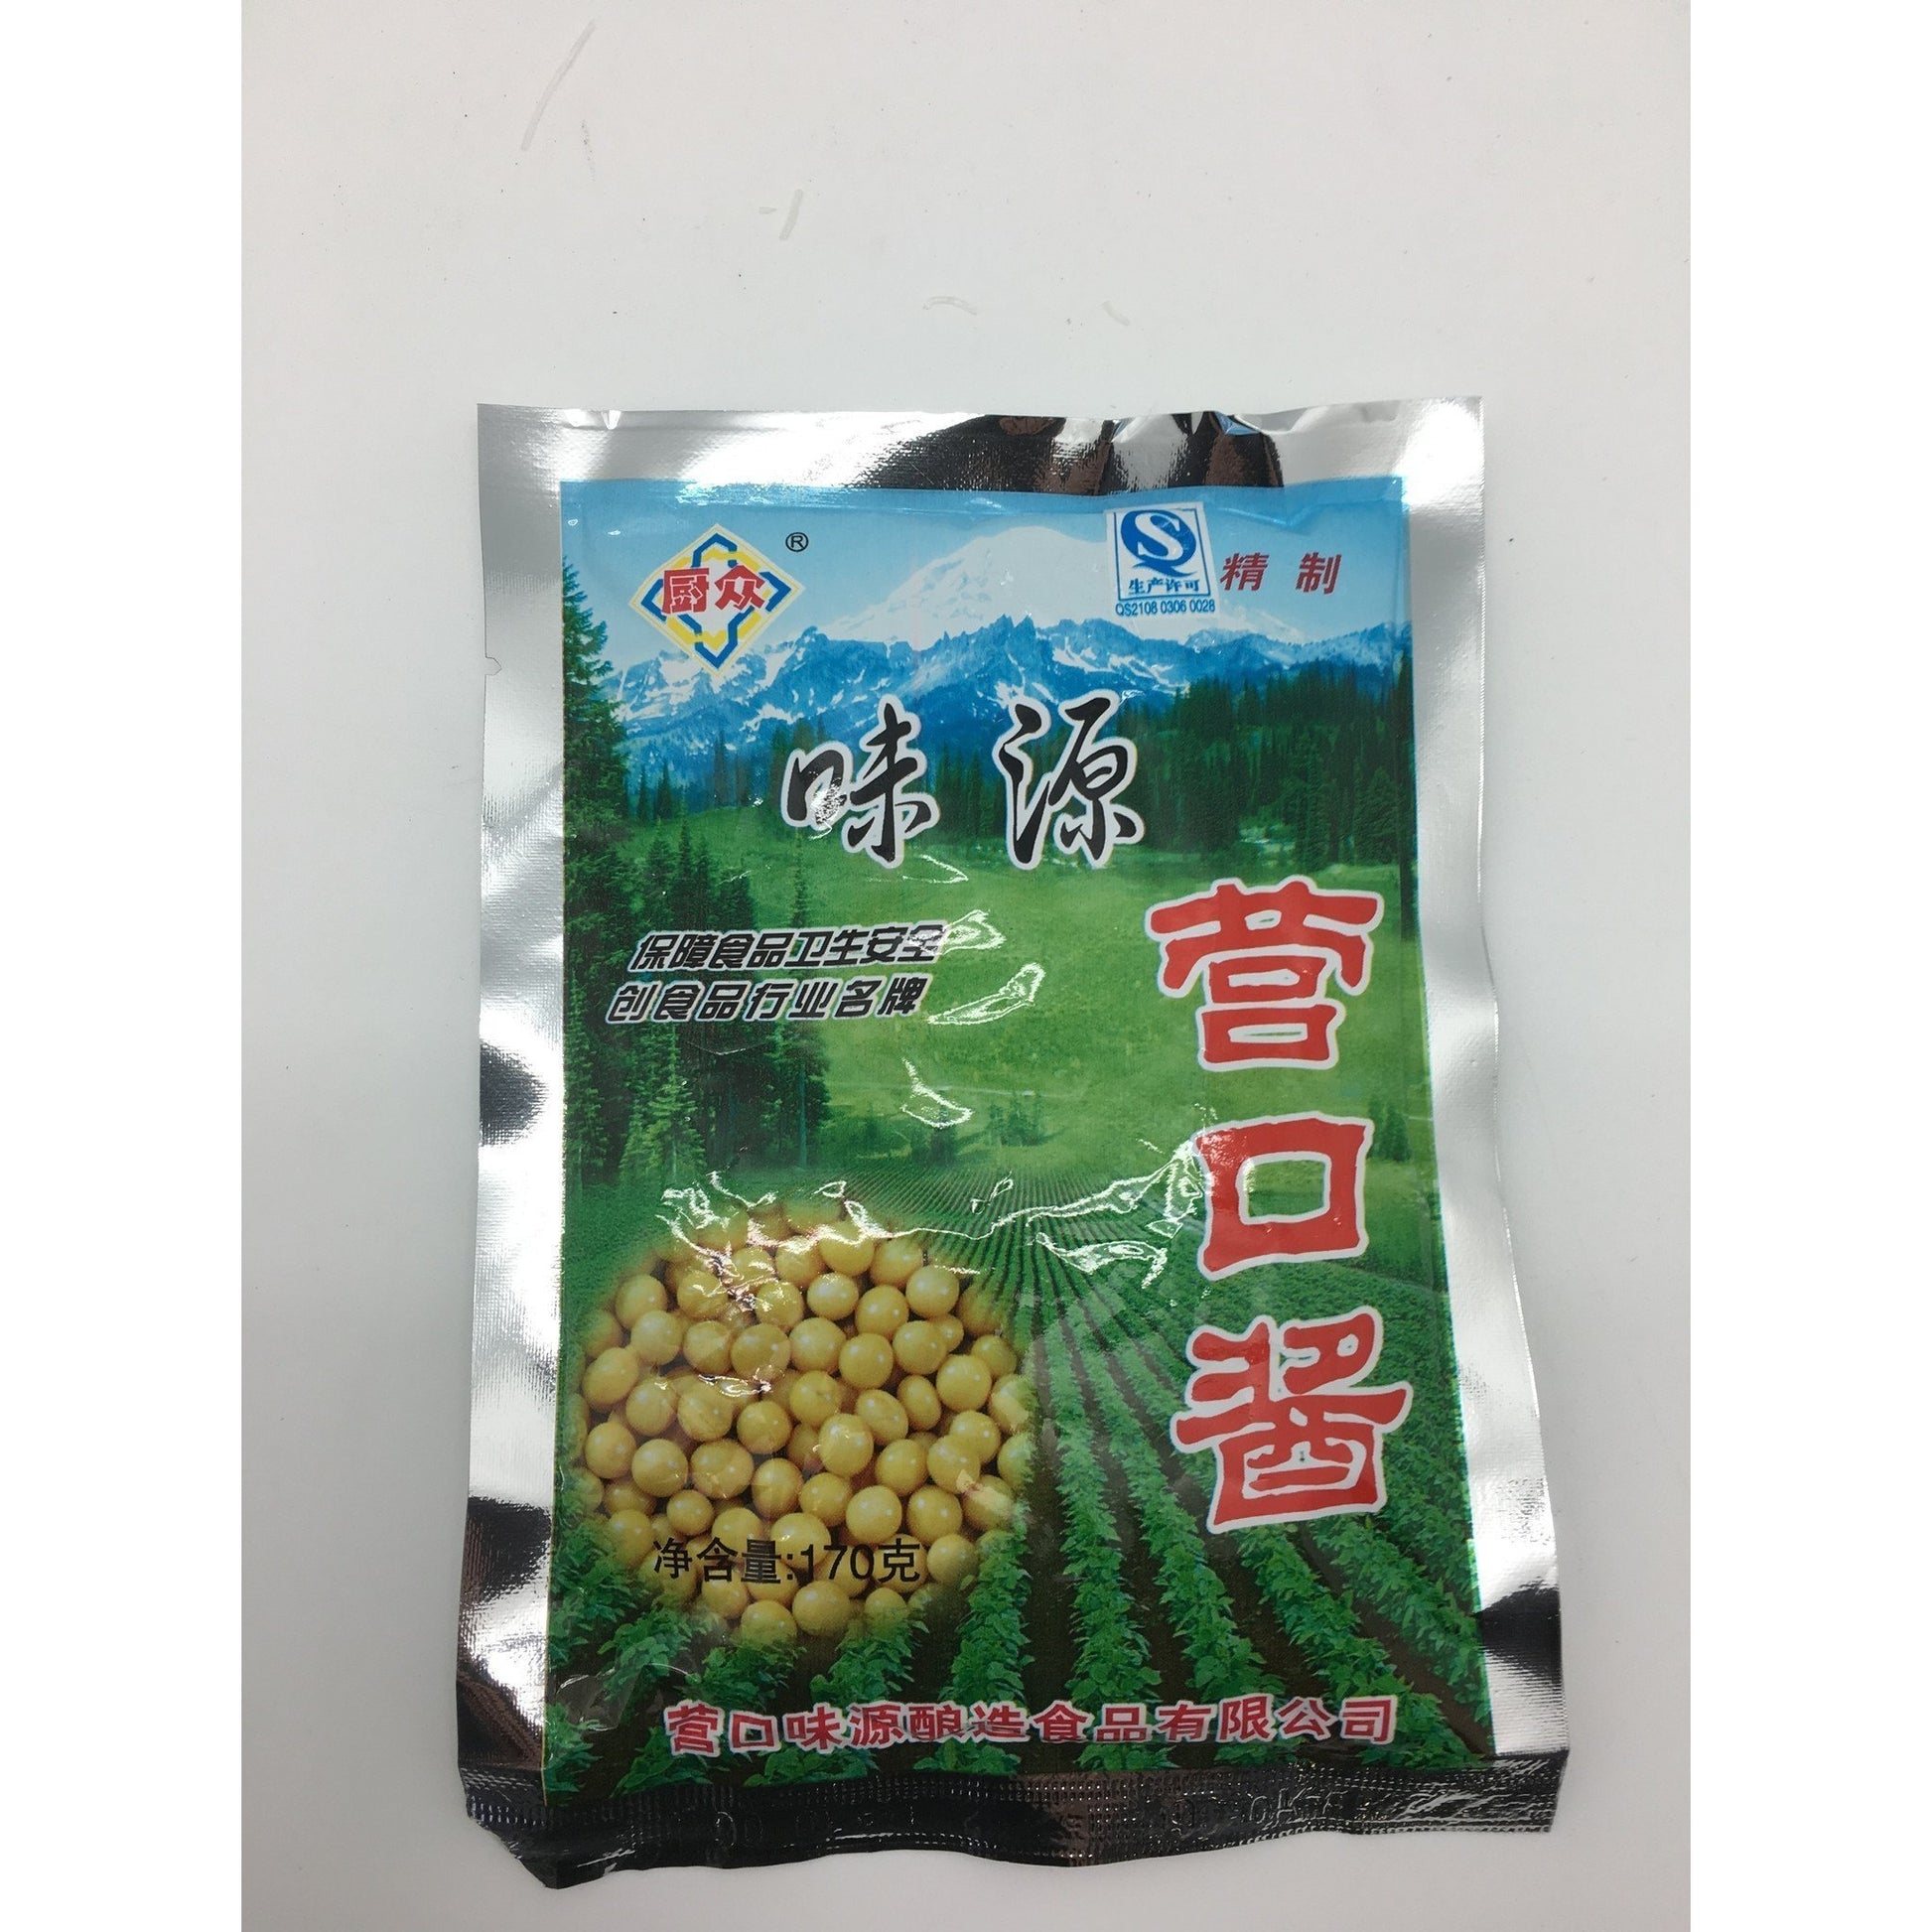 Q030A Chu Zhong Brand - Bean Paste 170g - 50 bags / 1CTN - New Eastland Pty Ltd - Asian food wholesalers